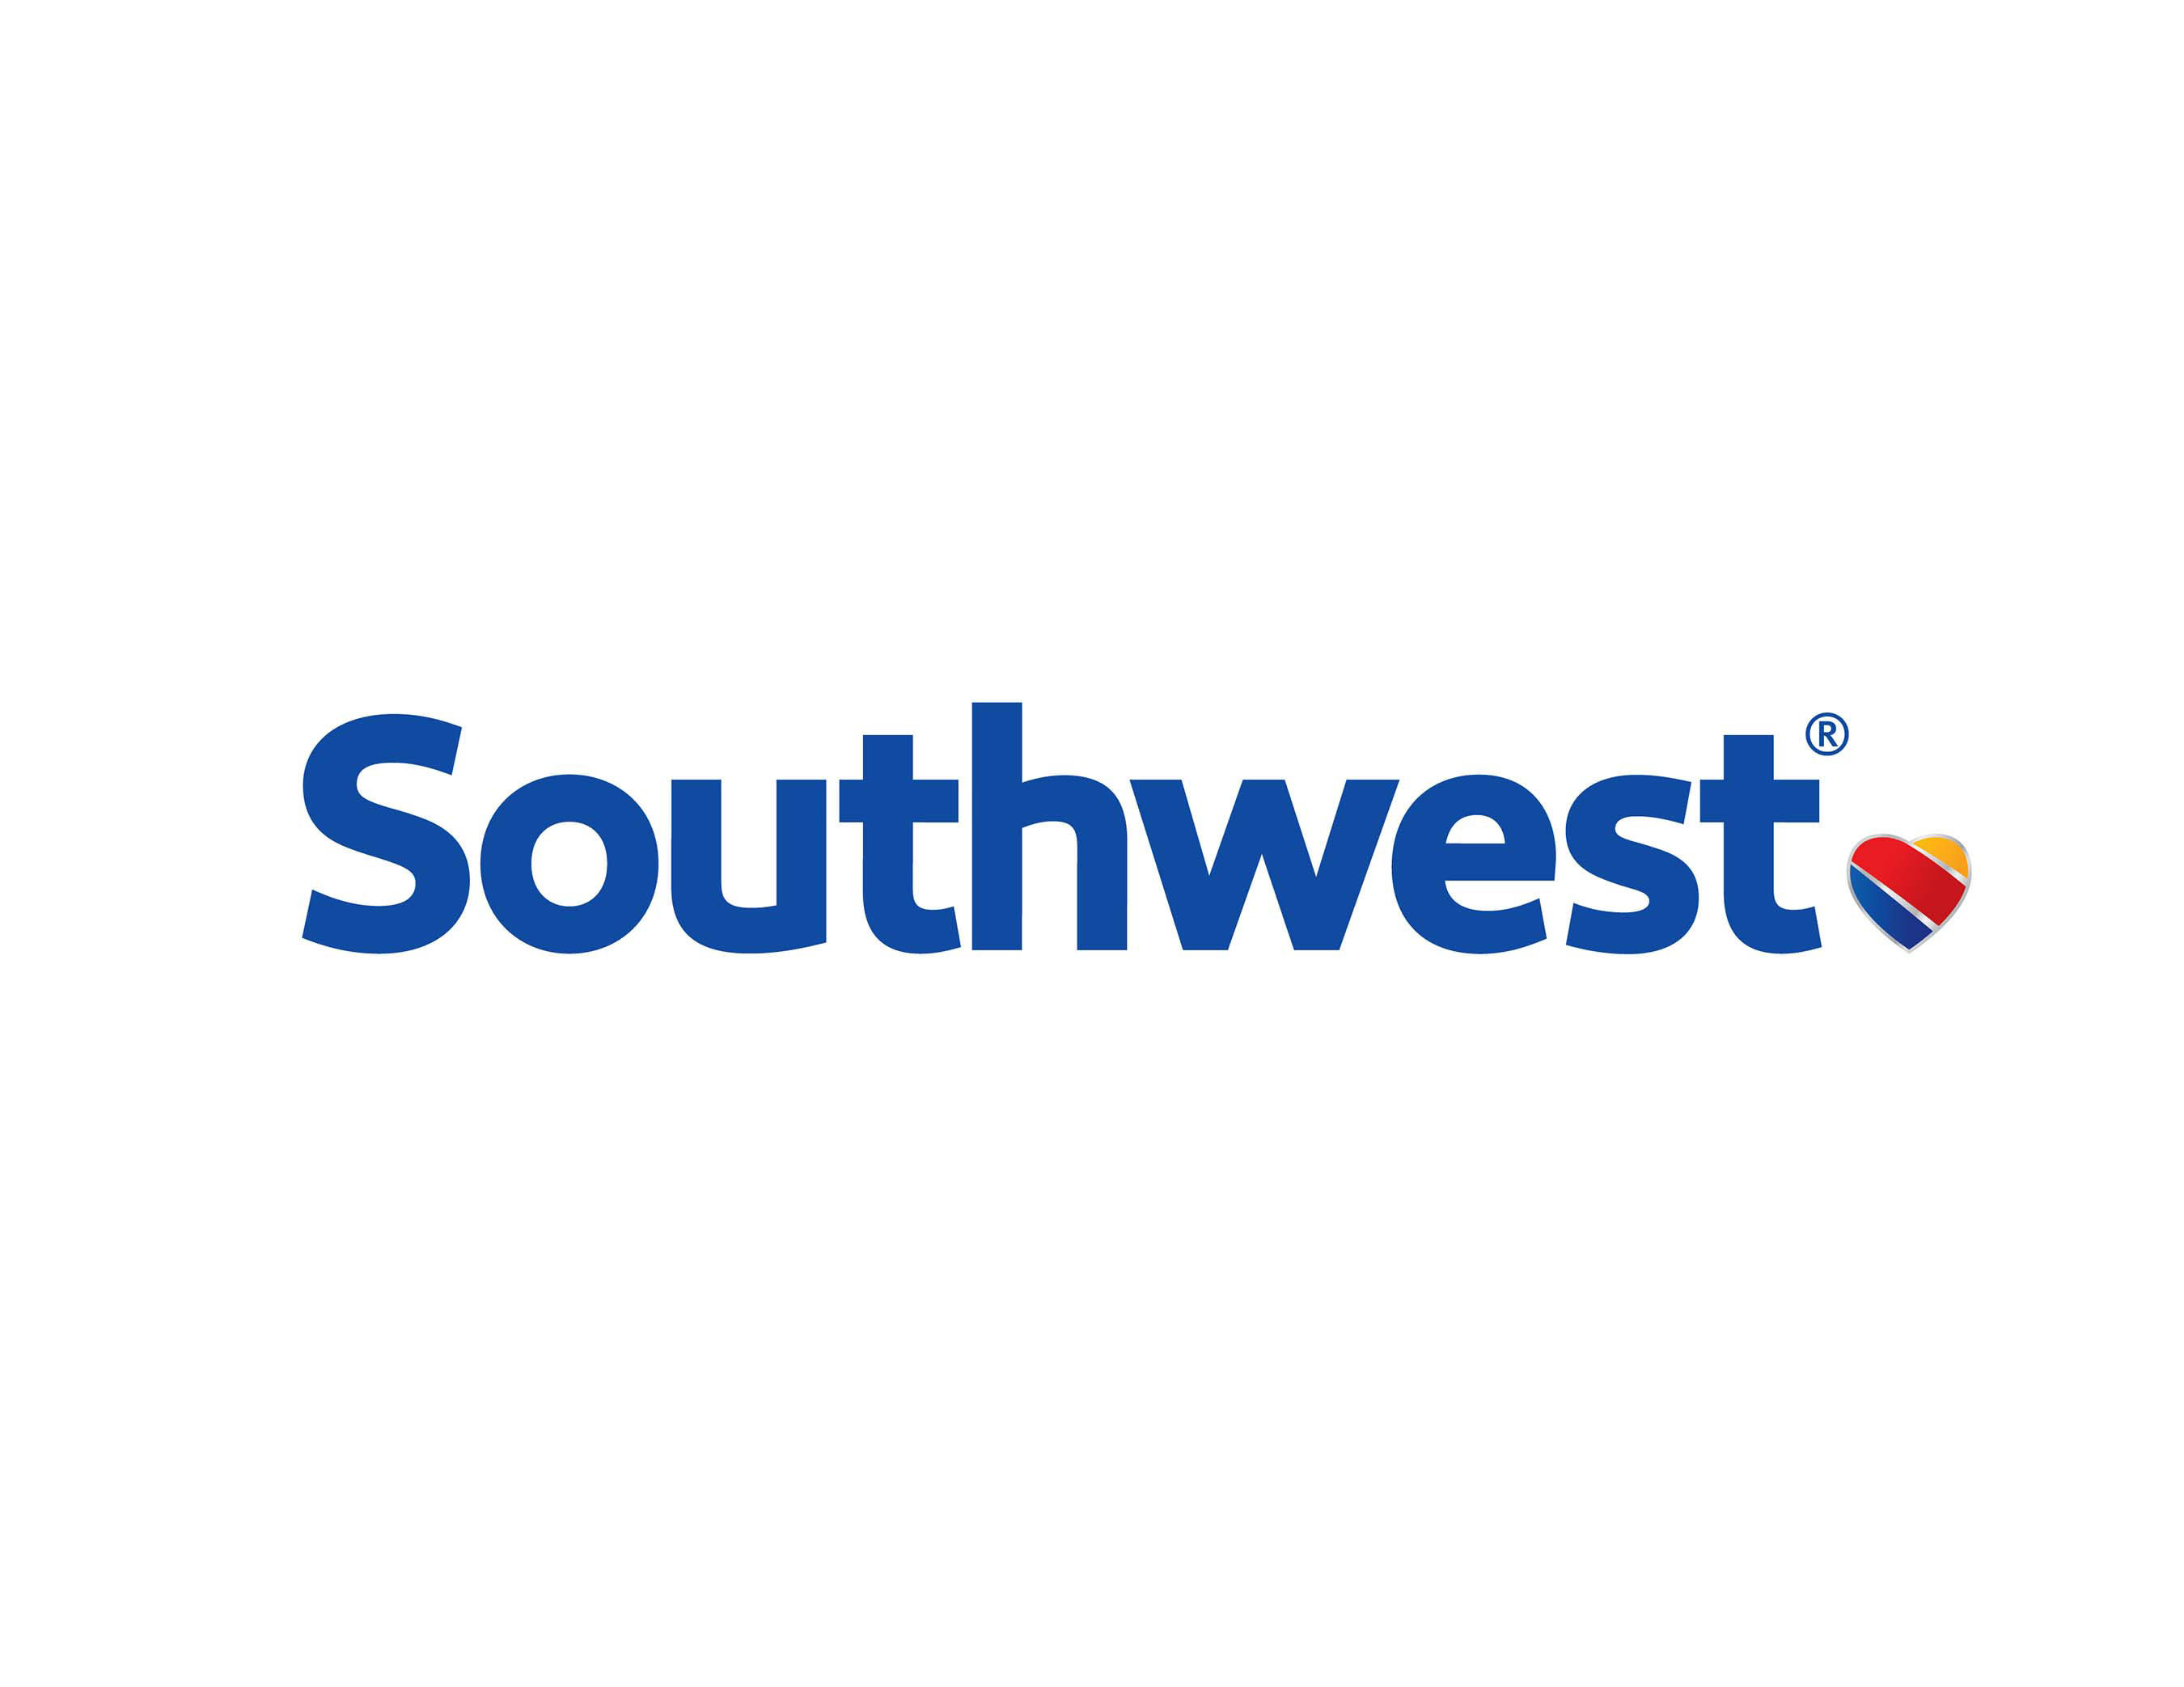 www.southwestairlines.com